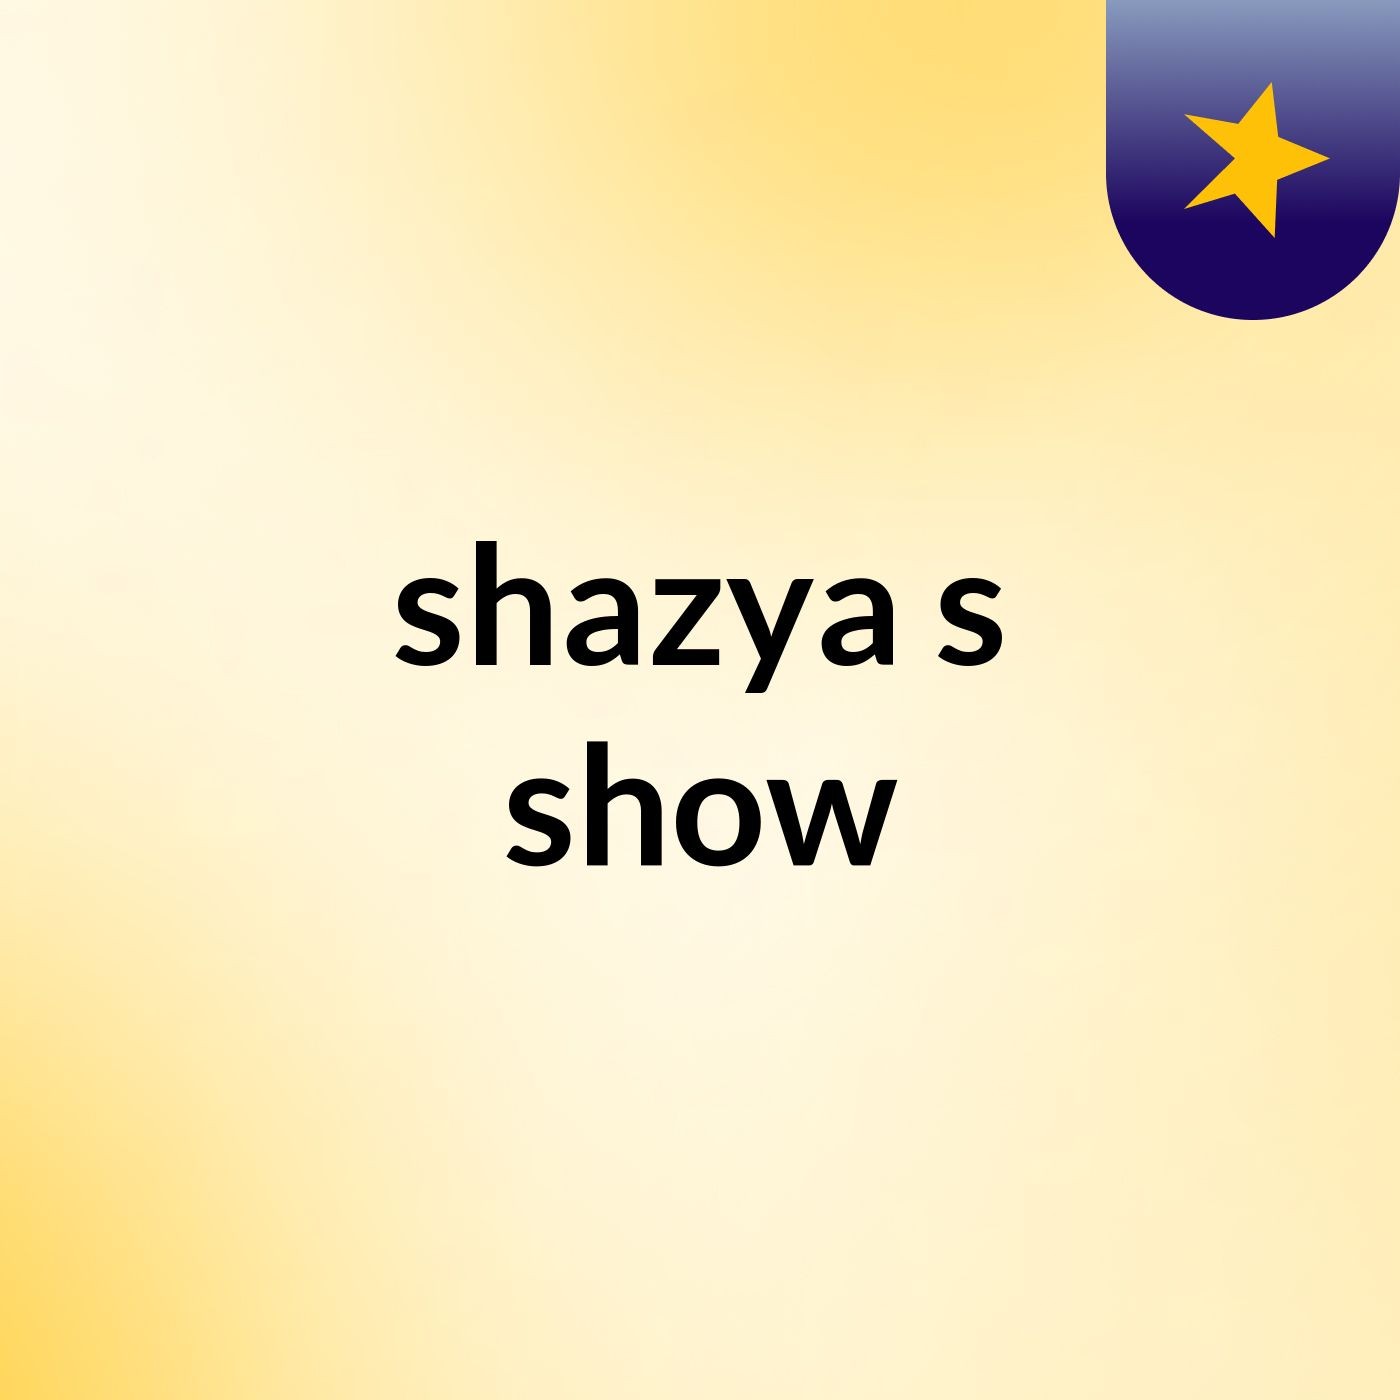 shazya's show